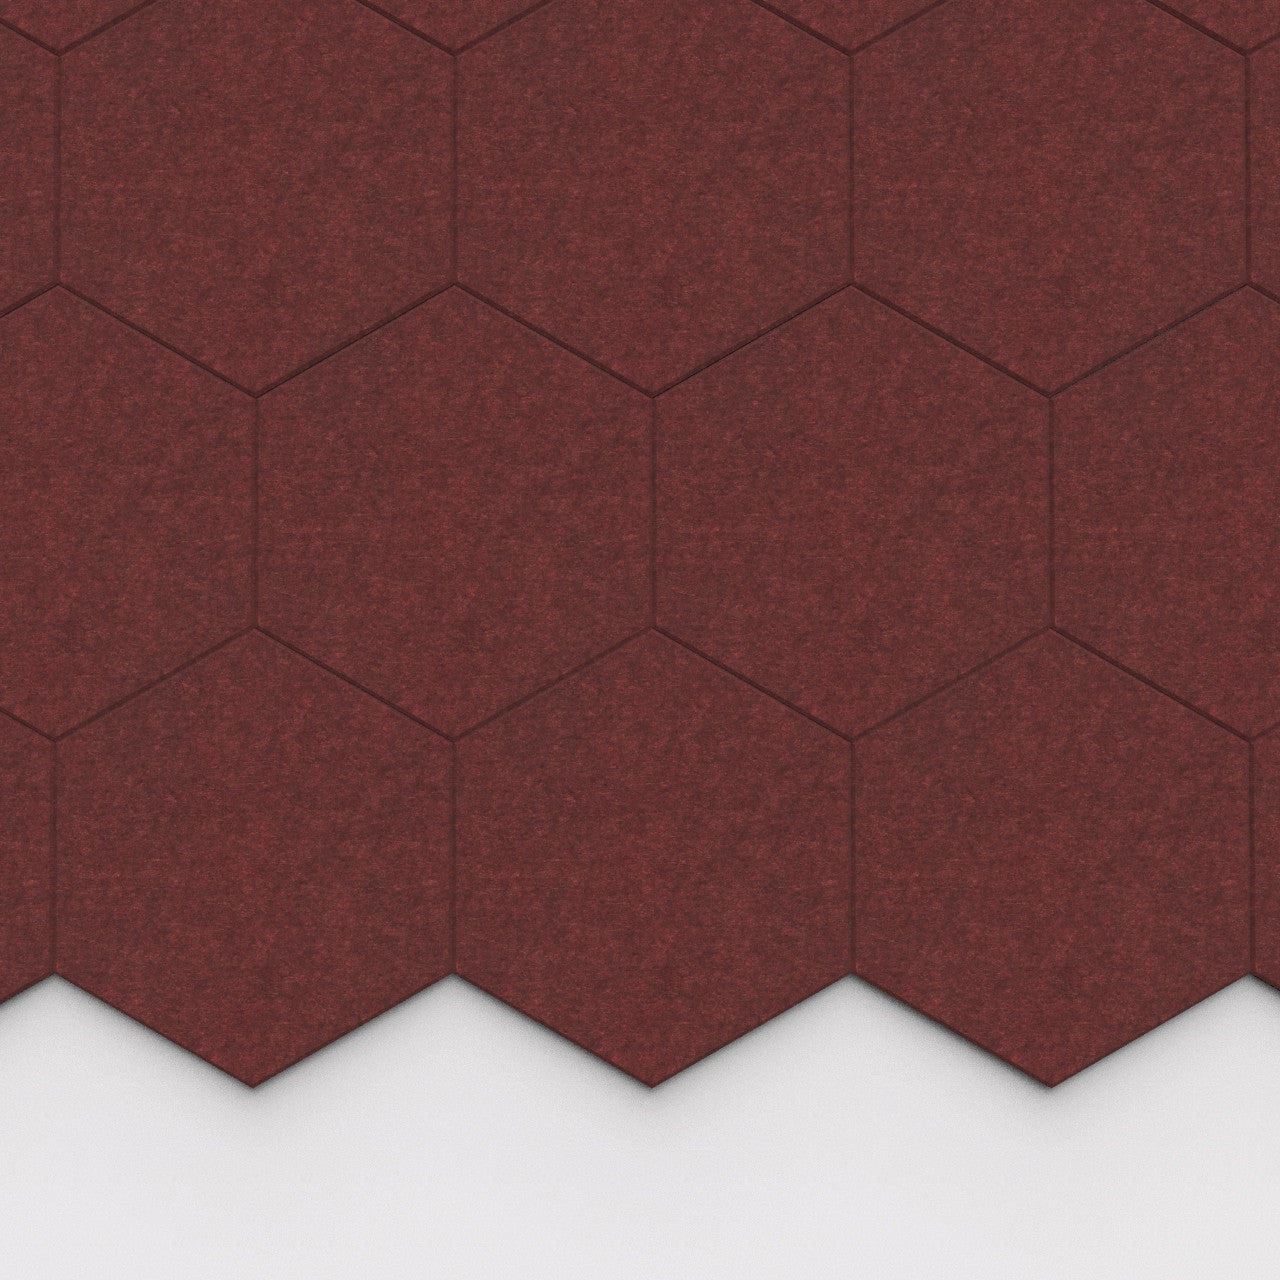 100% Recycled PET Felt Hexagon Plain Large Acoustic Tile Wine | Plastock